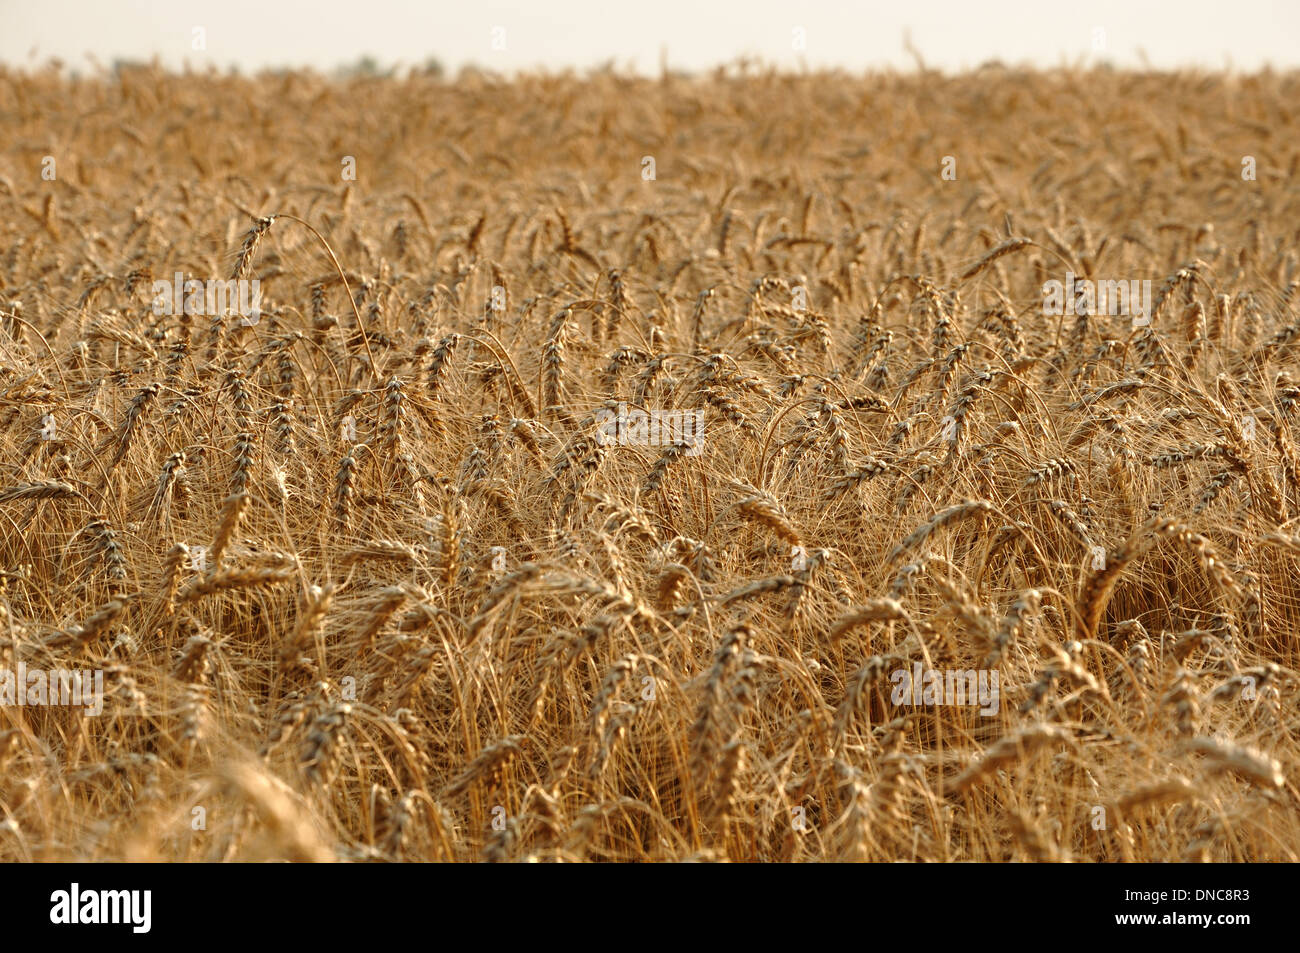 Field of golden ripe wheat Stock Photo